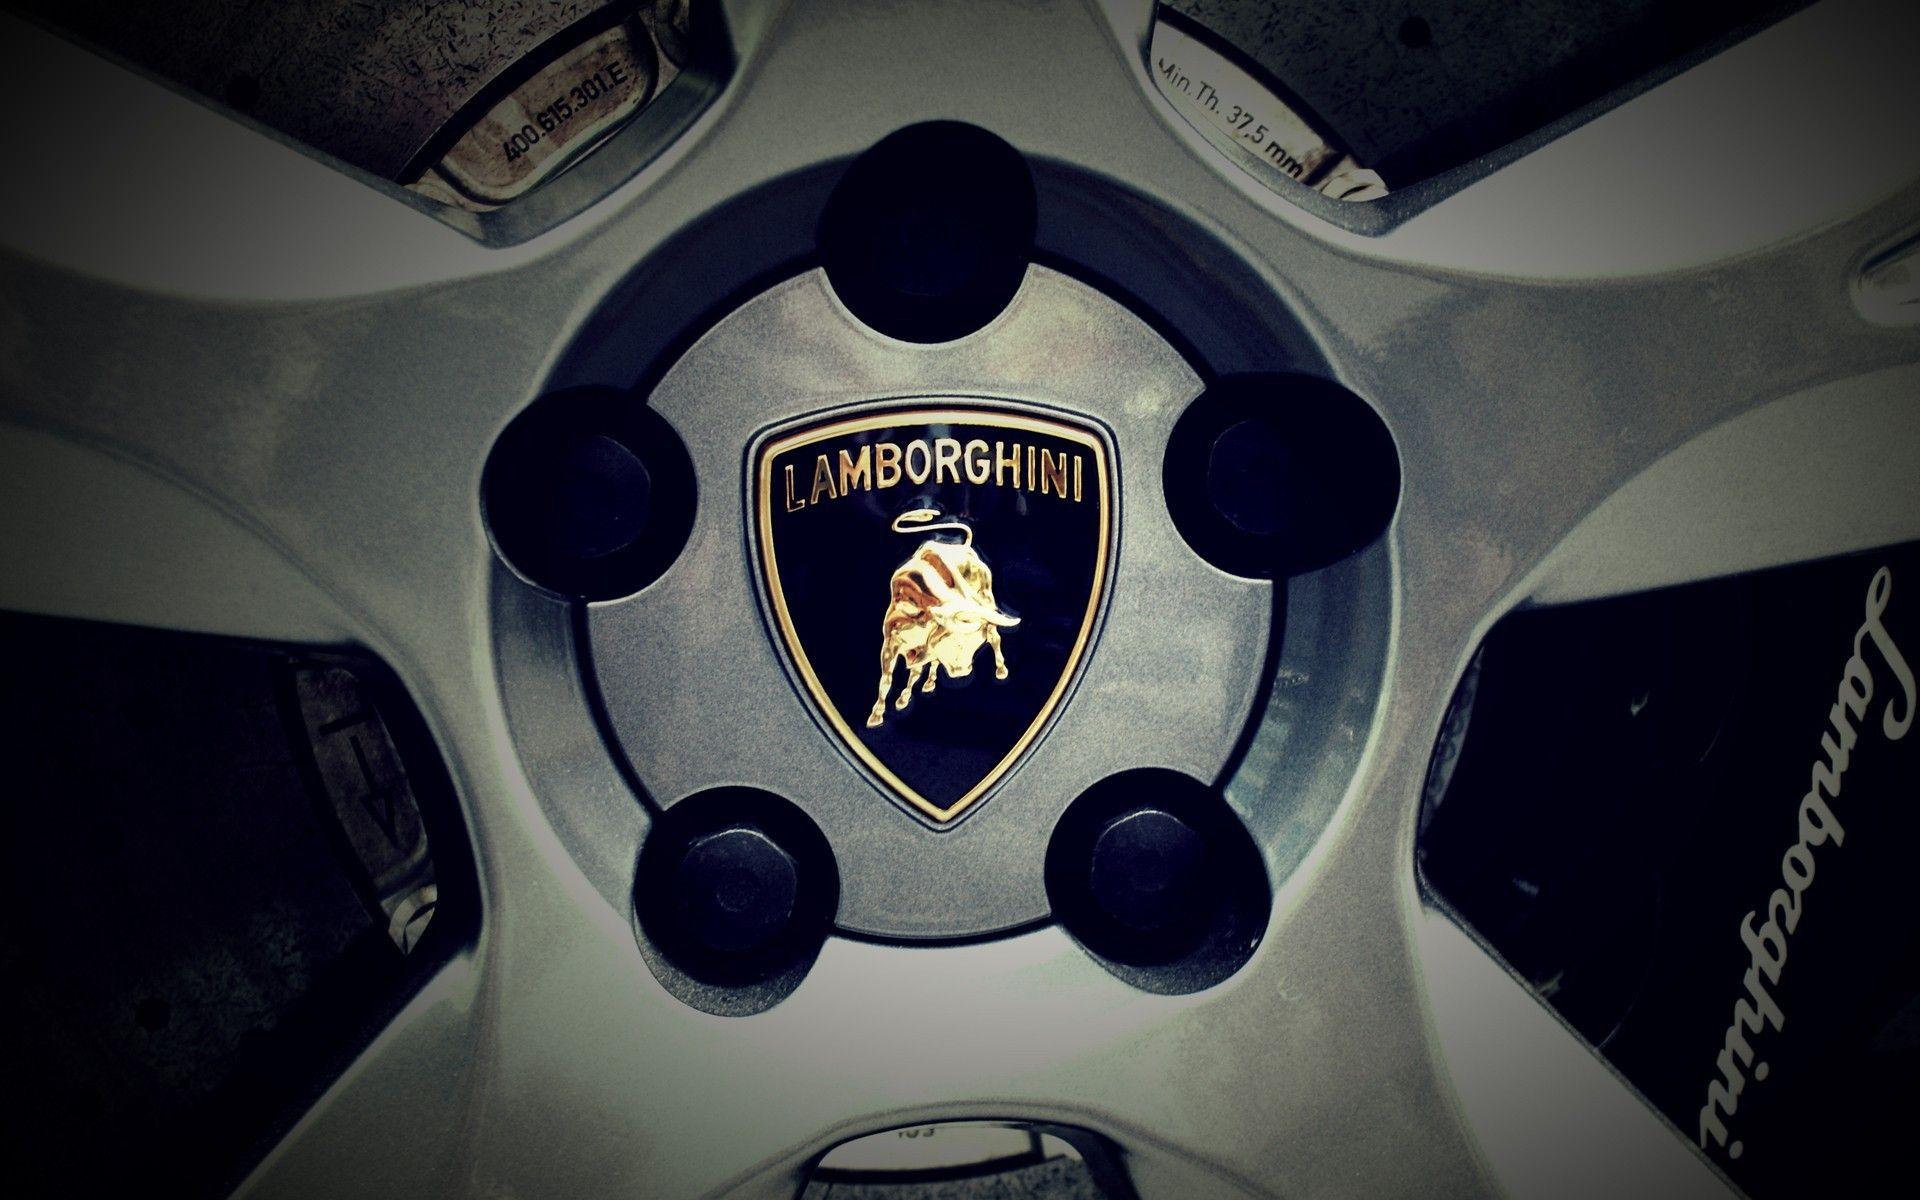 Lamborghini Logo wallpaper